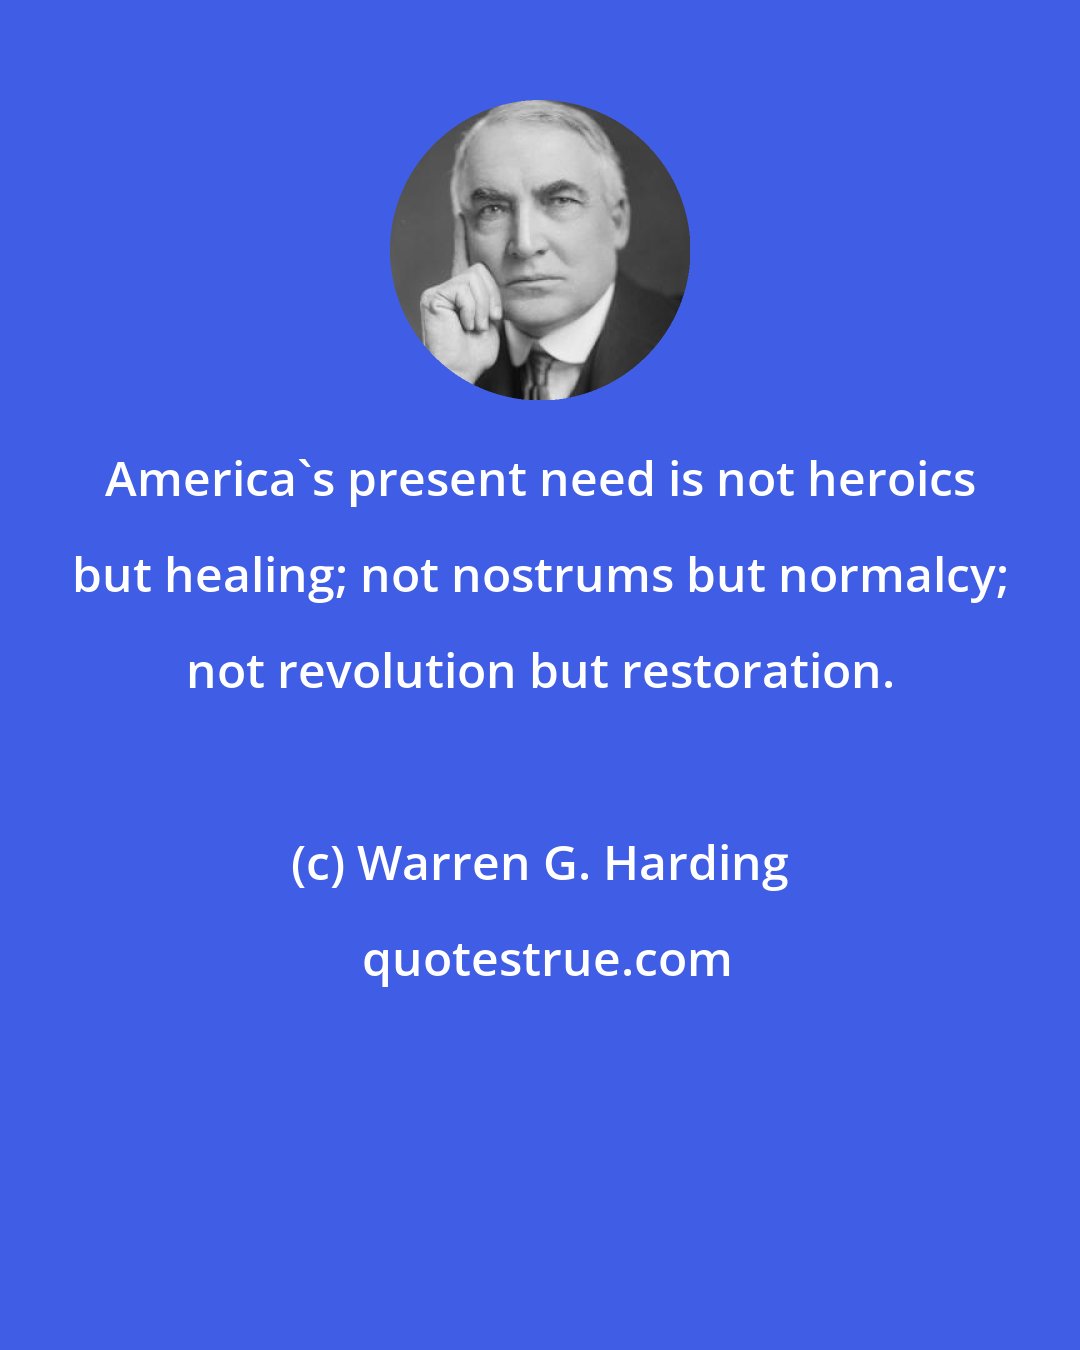 Warren G. Harding: America's present need is not heroics but healing; not nostrums but normalcy; not revolution but restoration.